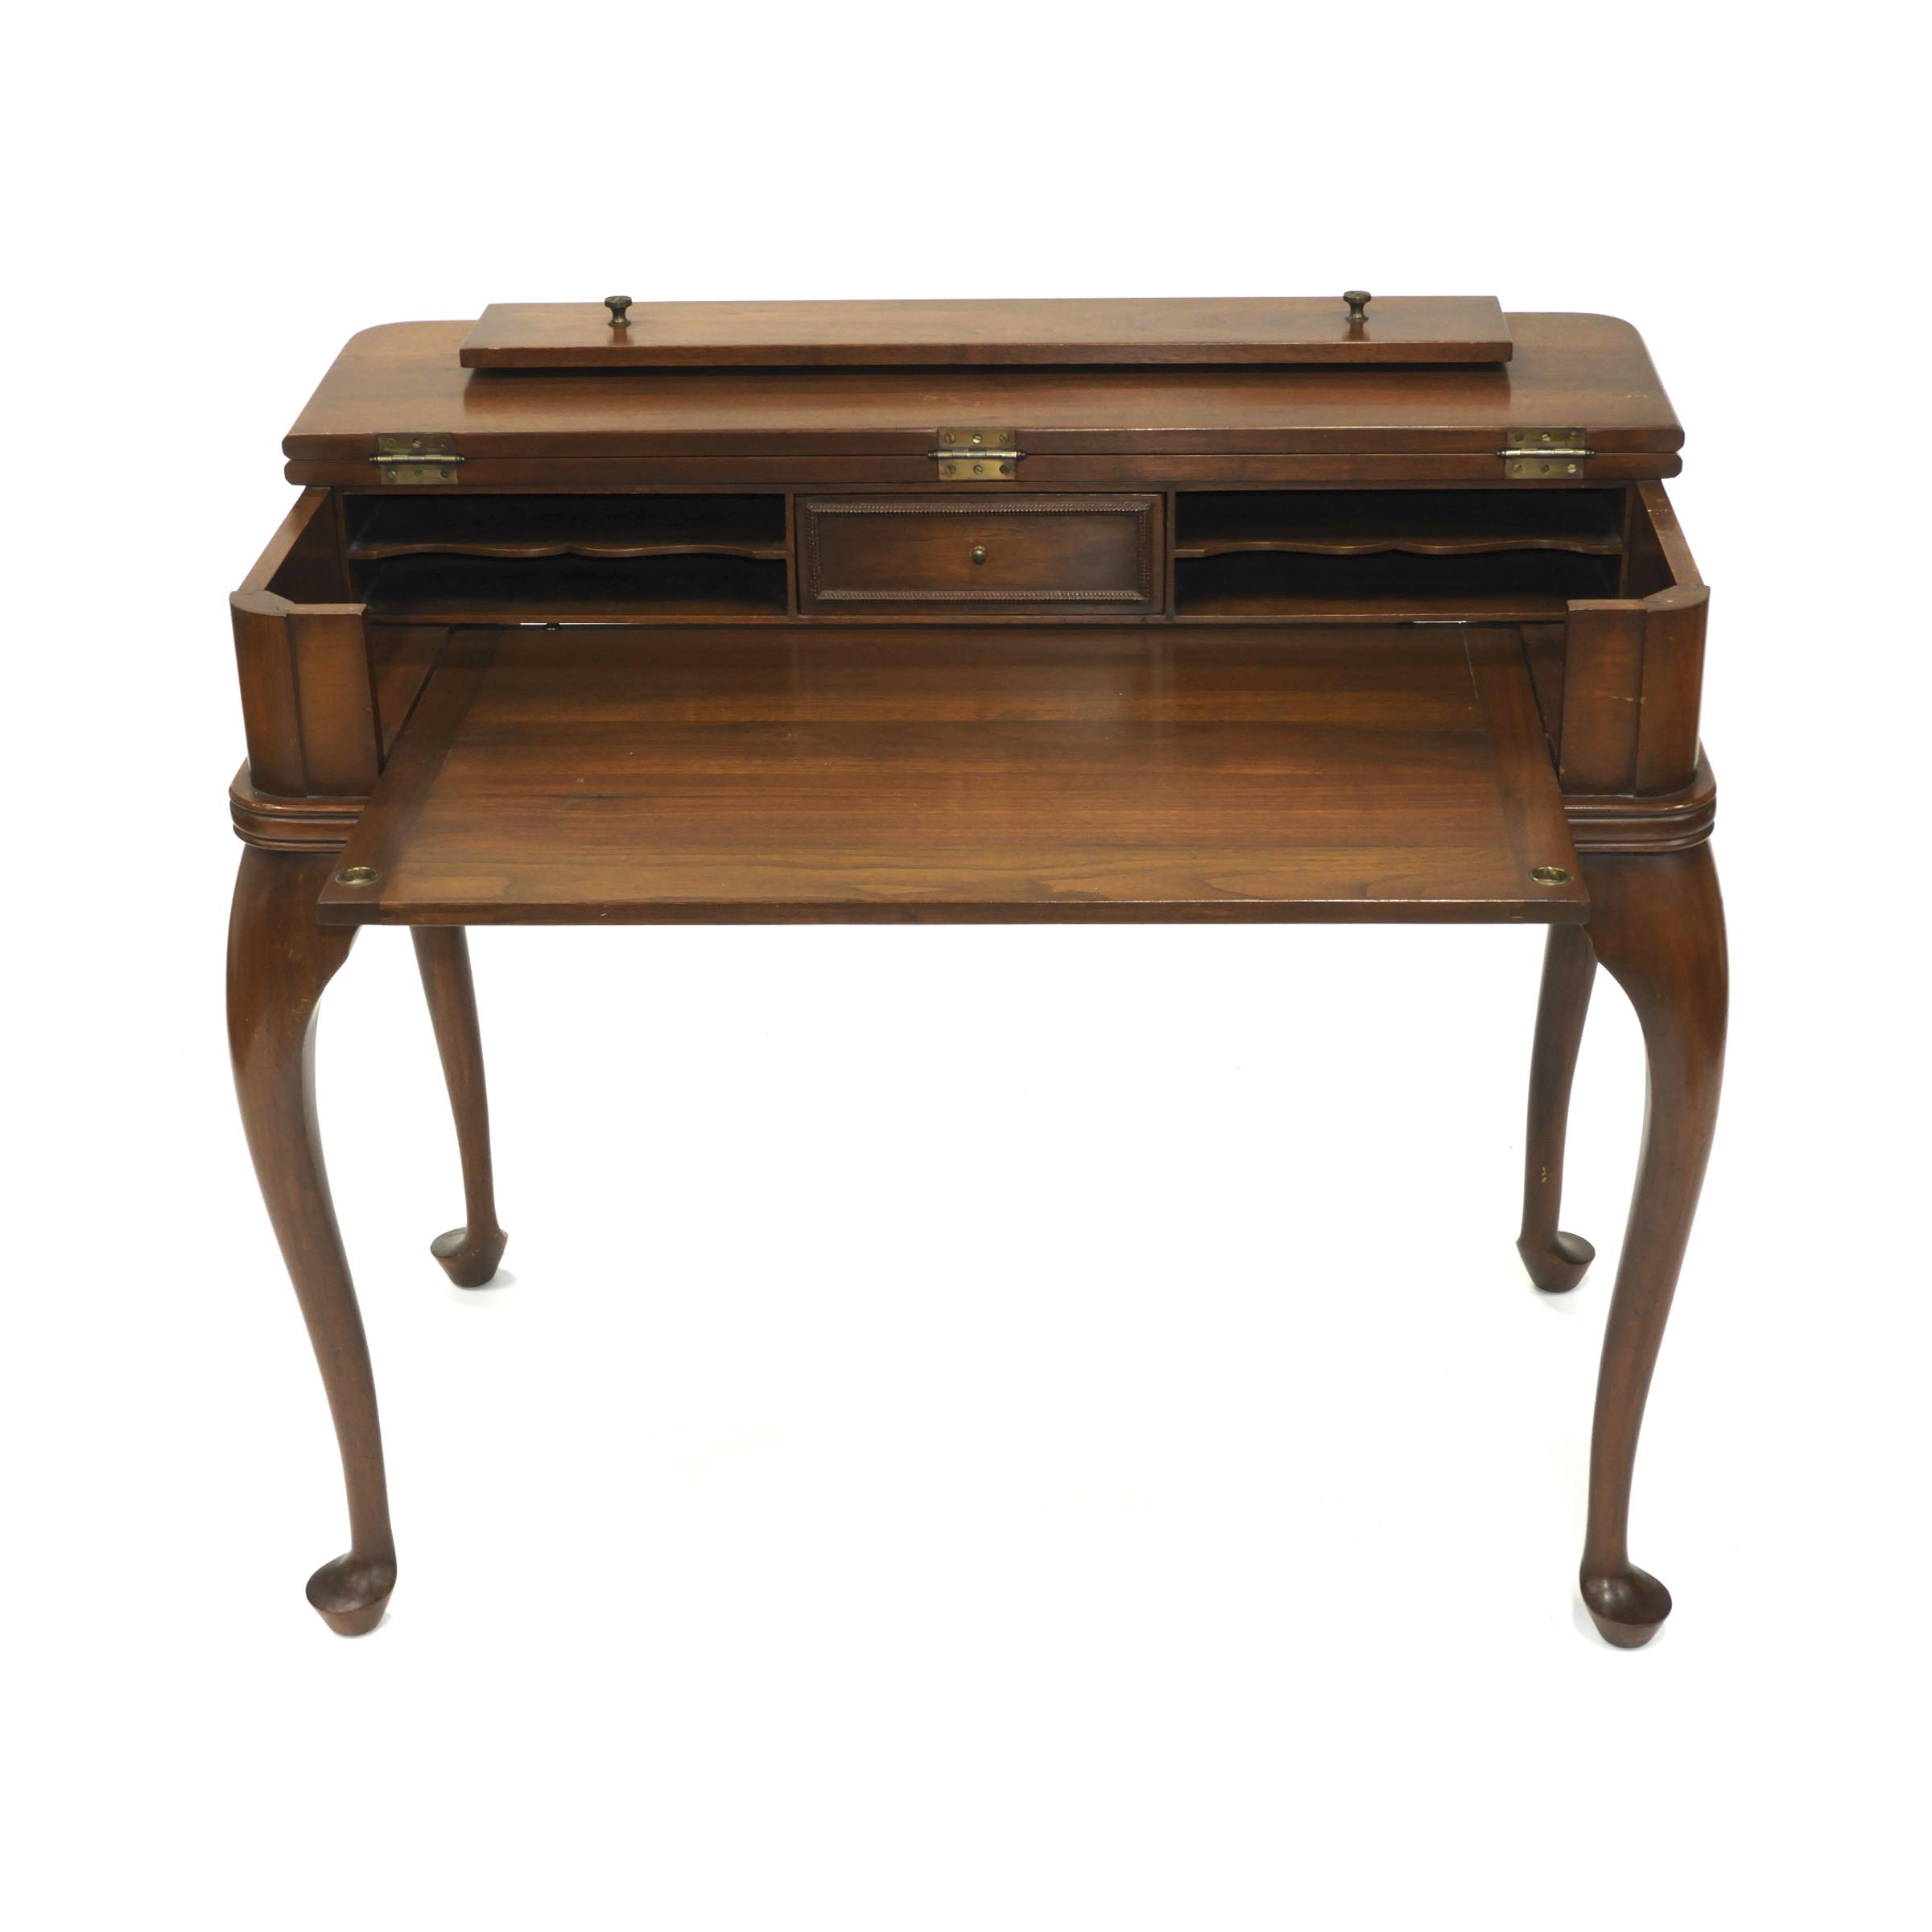 Queen Anne Style Walnut Desk, mid